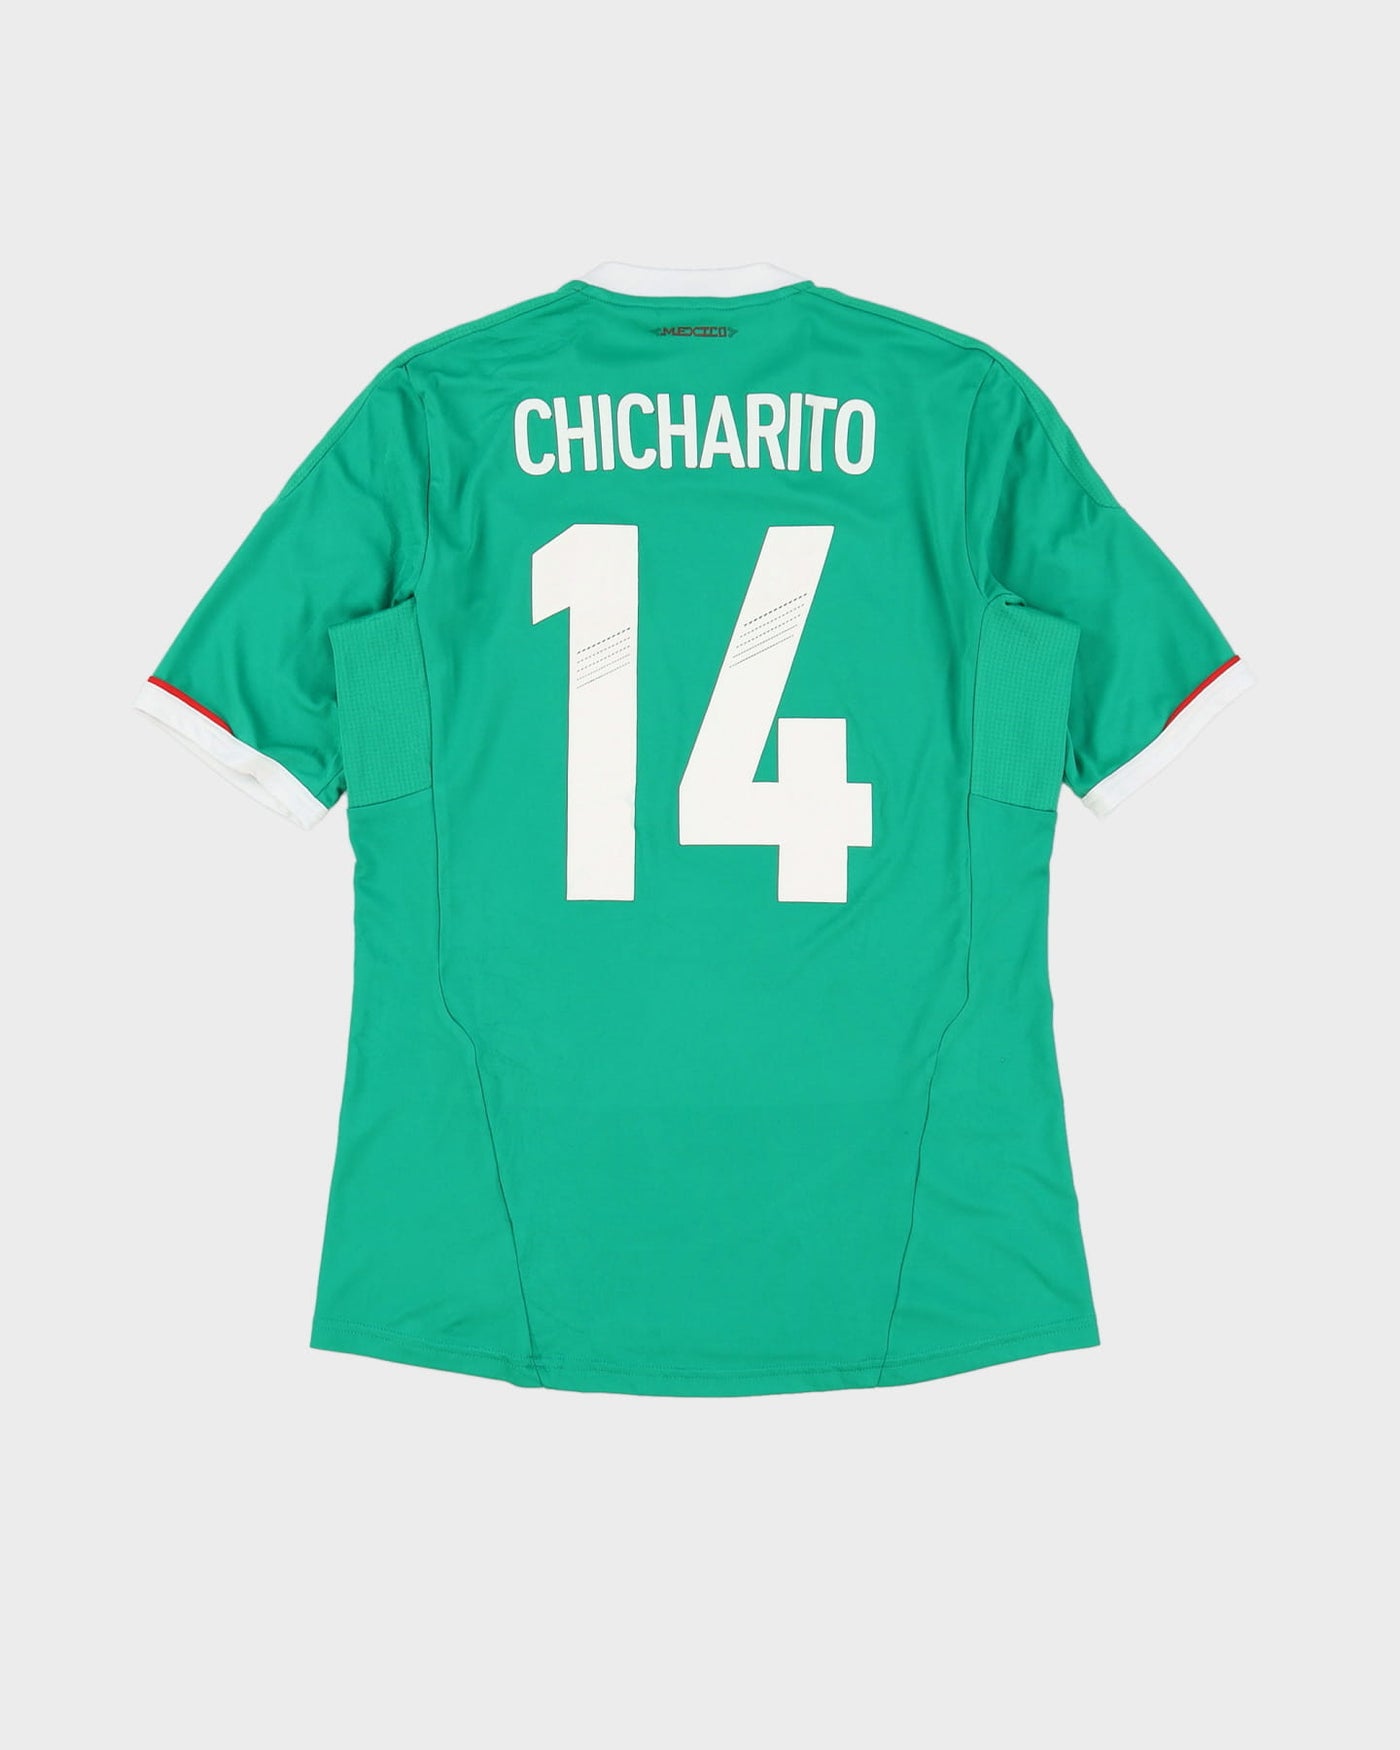 2011 'Chicarito' Javier Hernandez #14 Mexico Adidas Green Football Shirt / Jersey - S